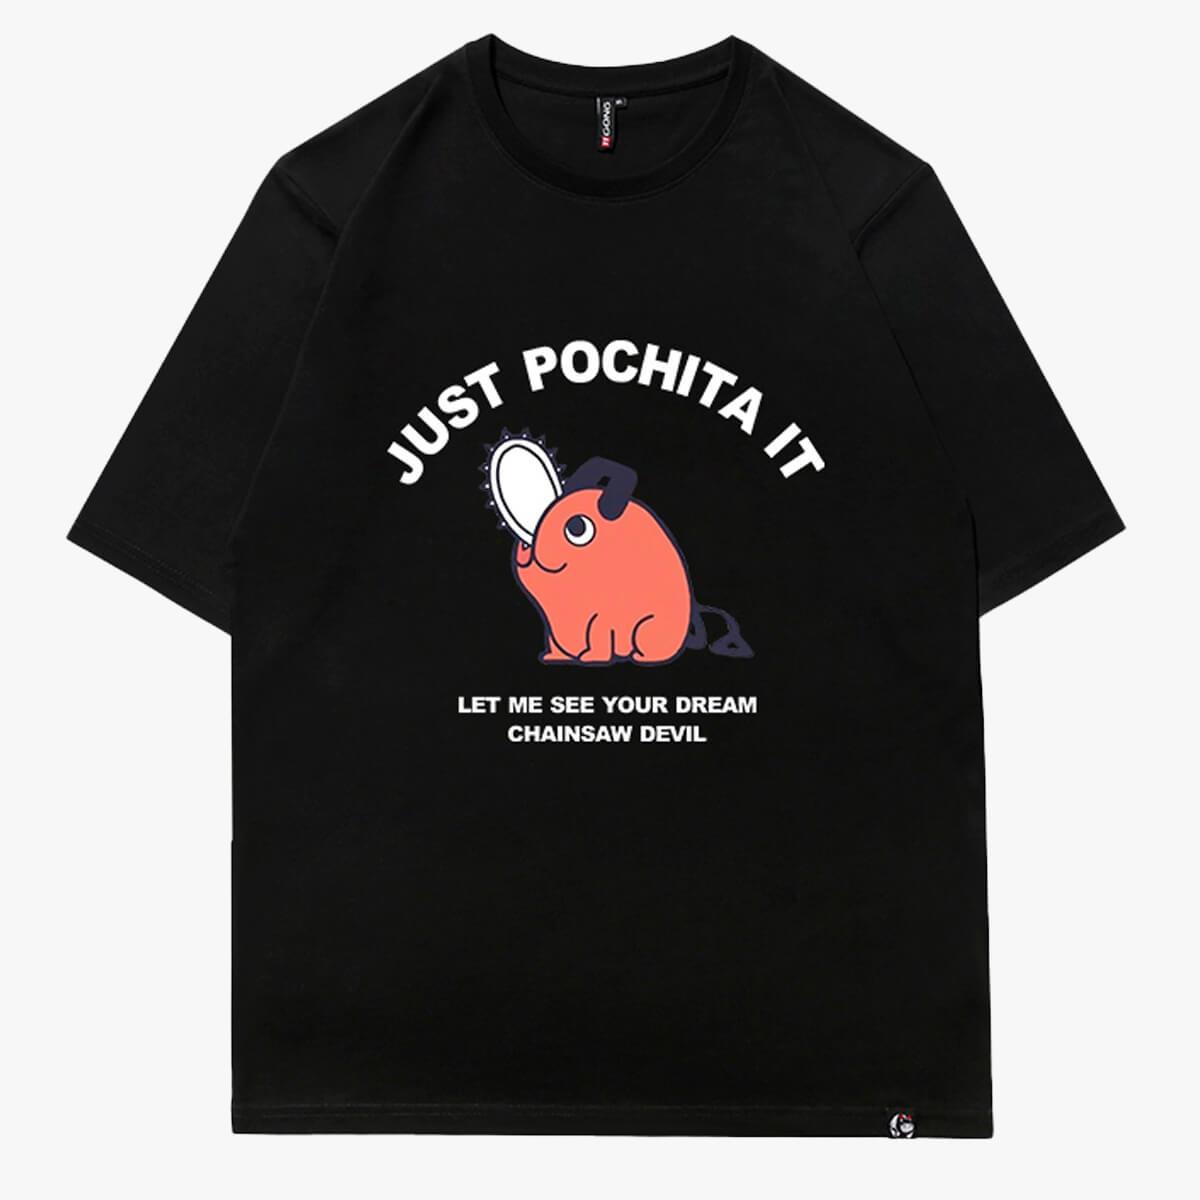 Just Pochita It Chainsaw Man T-Shirt - Aesthetic Clothes Shop